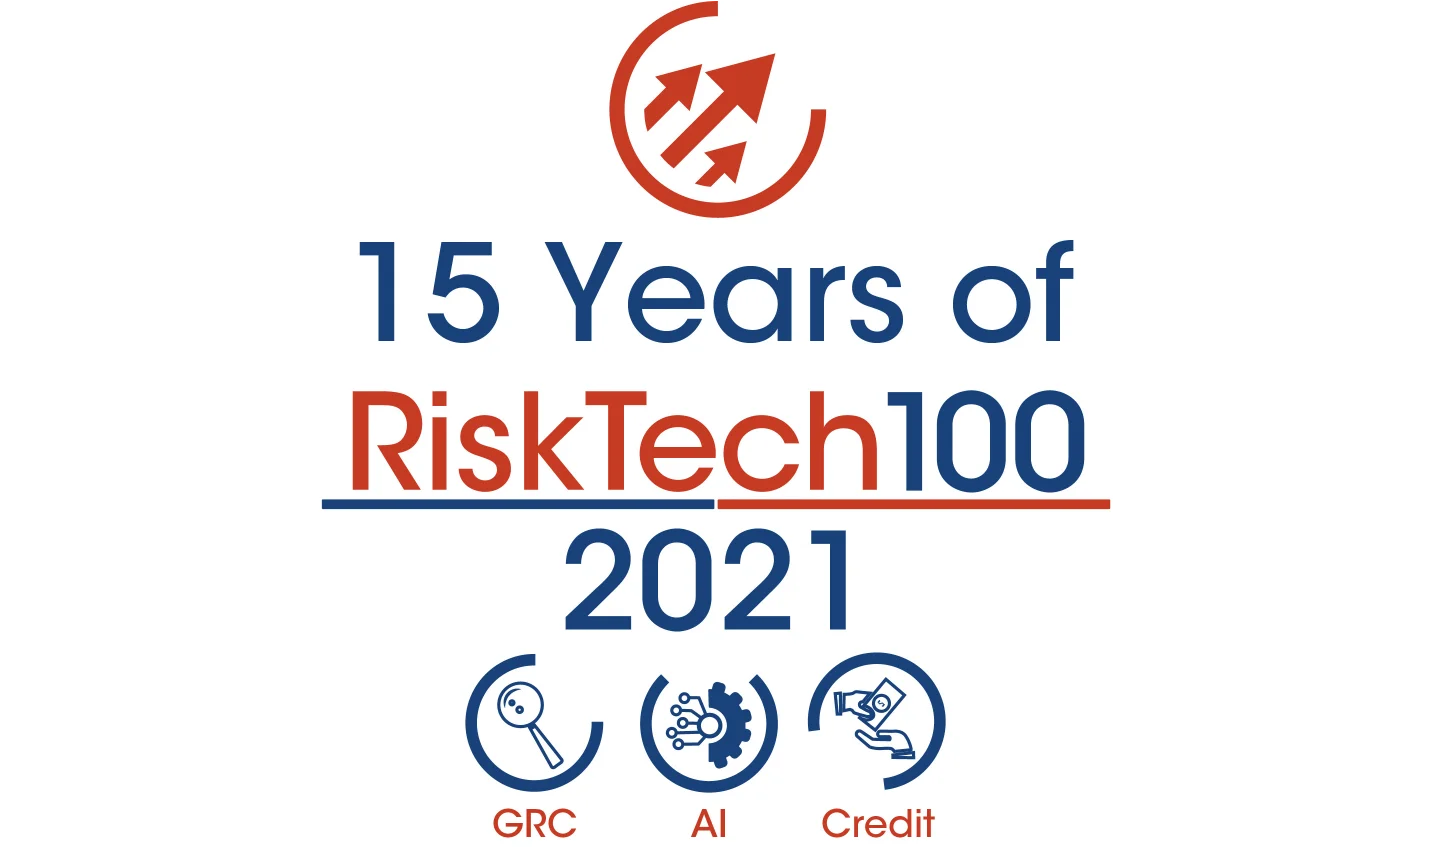 Risktech100 2021 logo